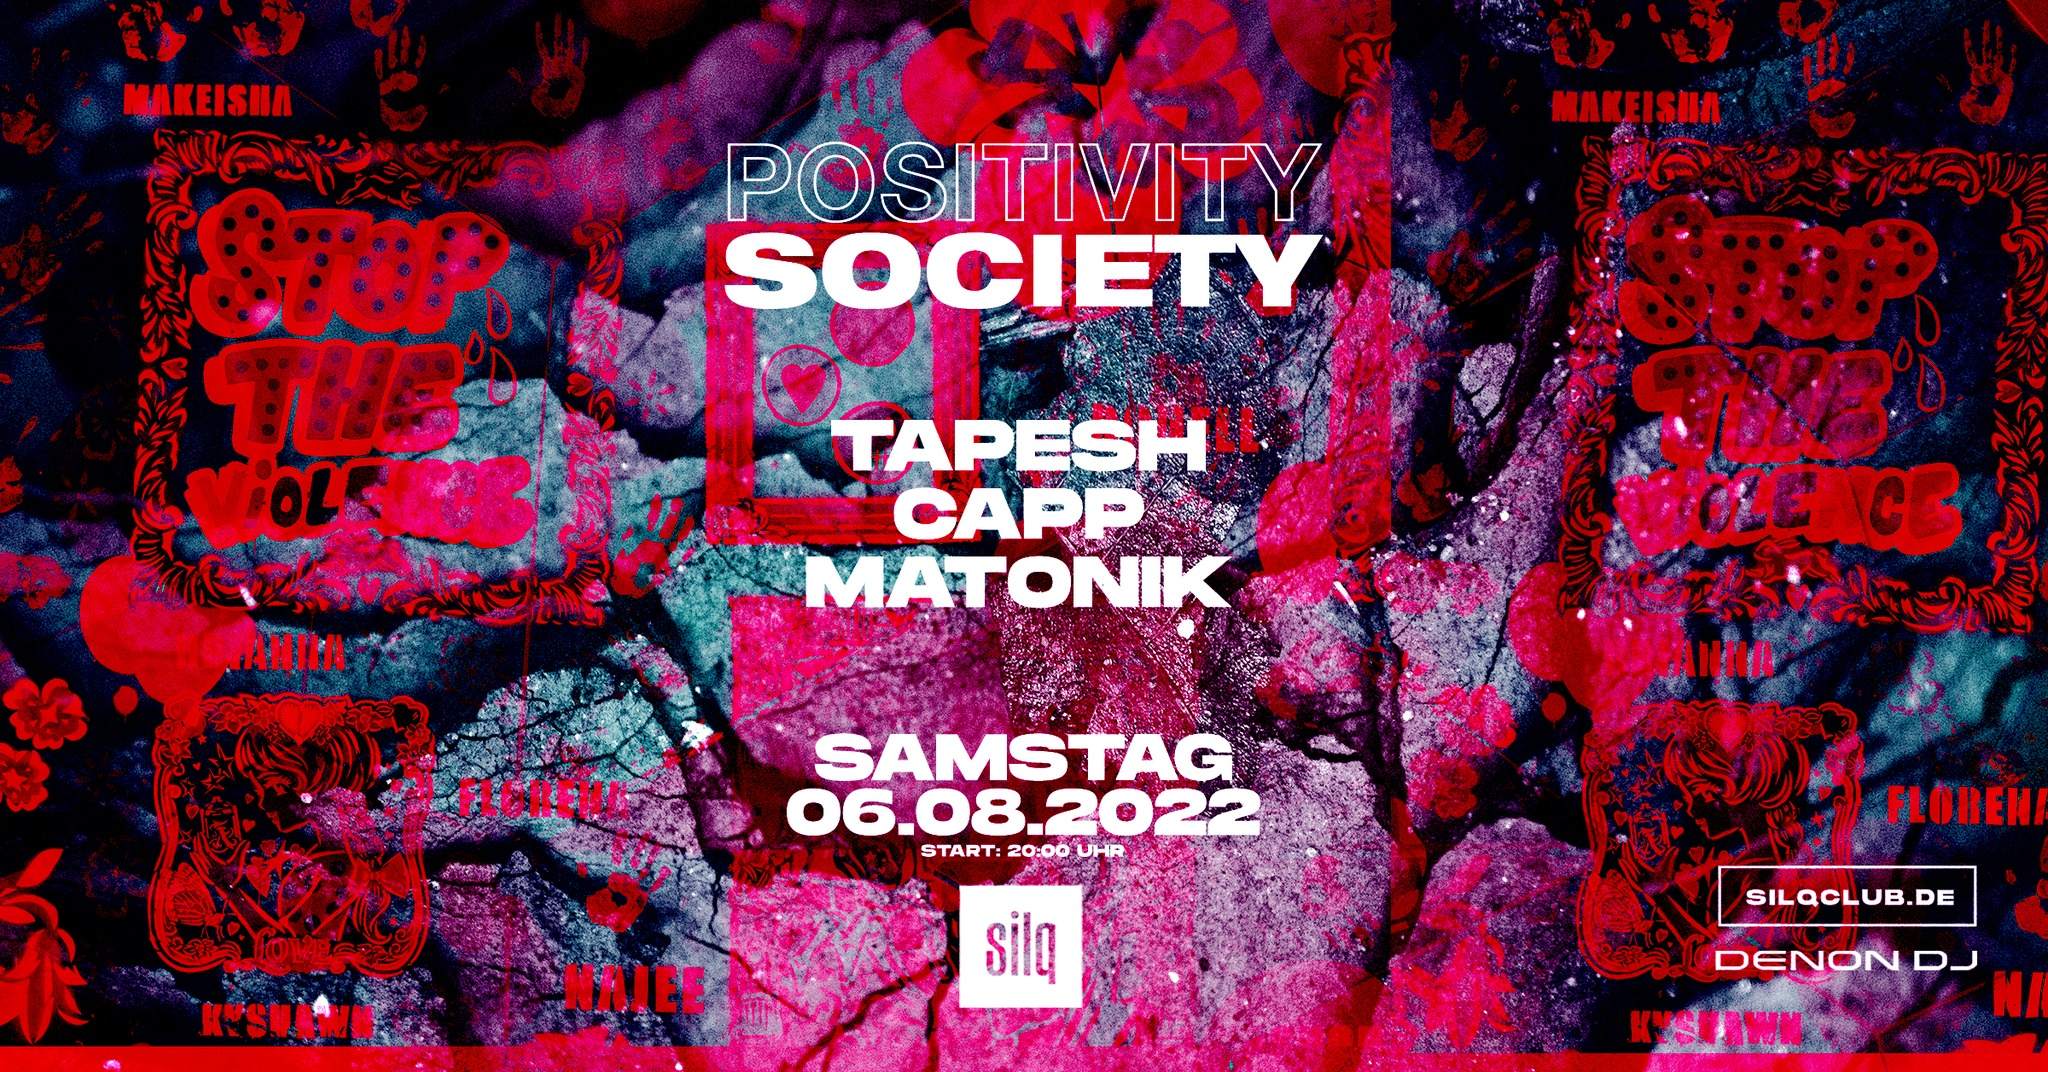 Positivity Society with Tapesh, Capp, Matonik - フライヤー表